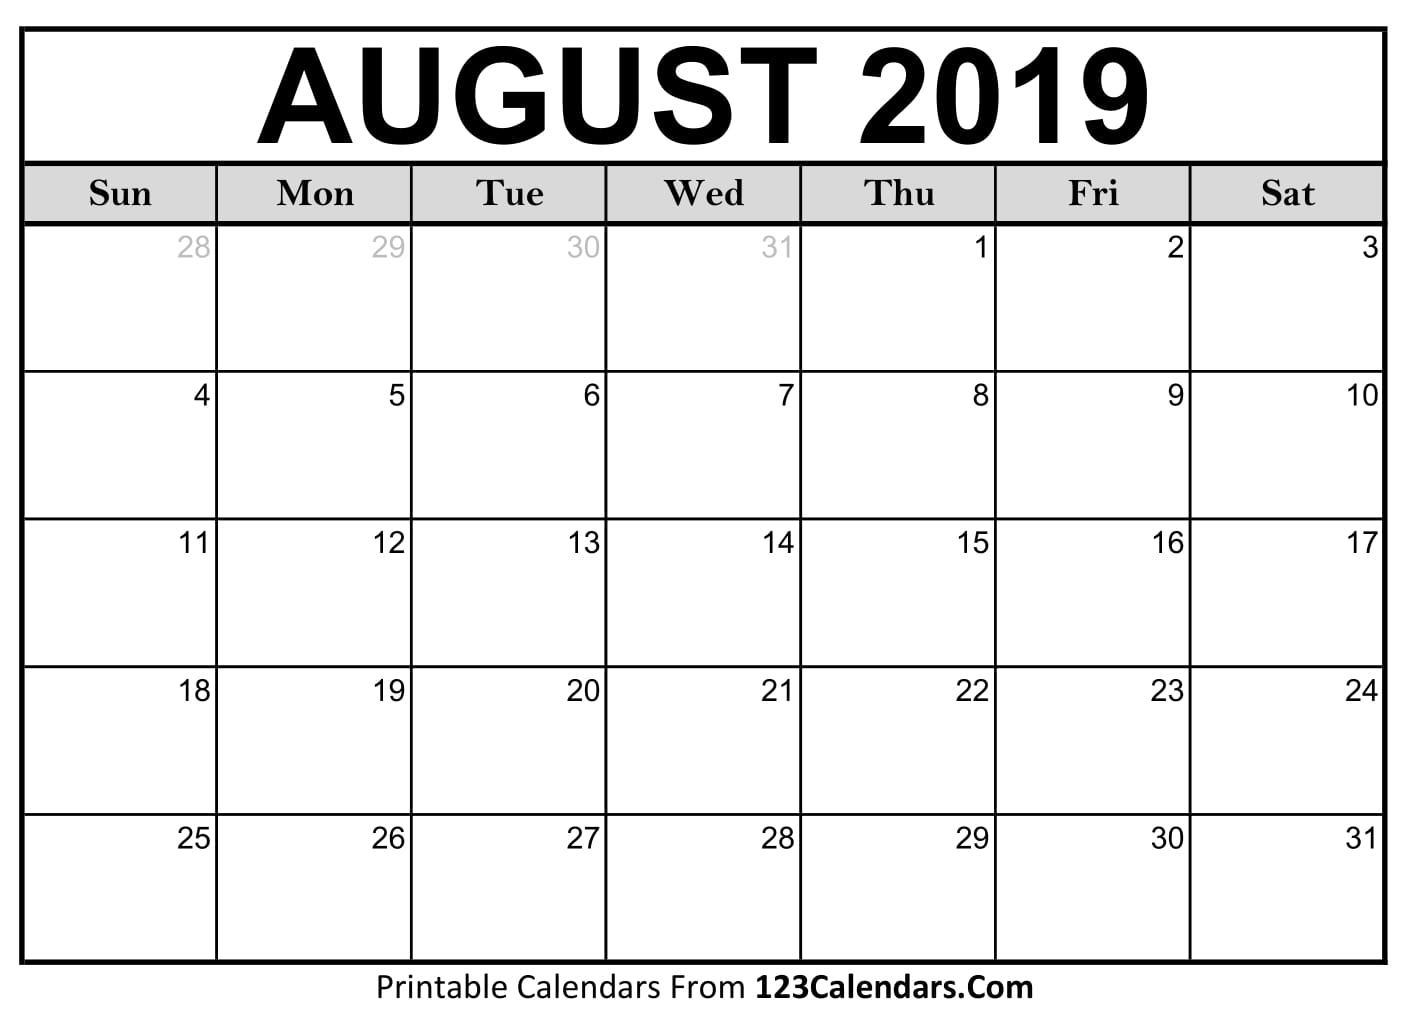 August 2019 Printable Calendar | 123Calendars